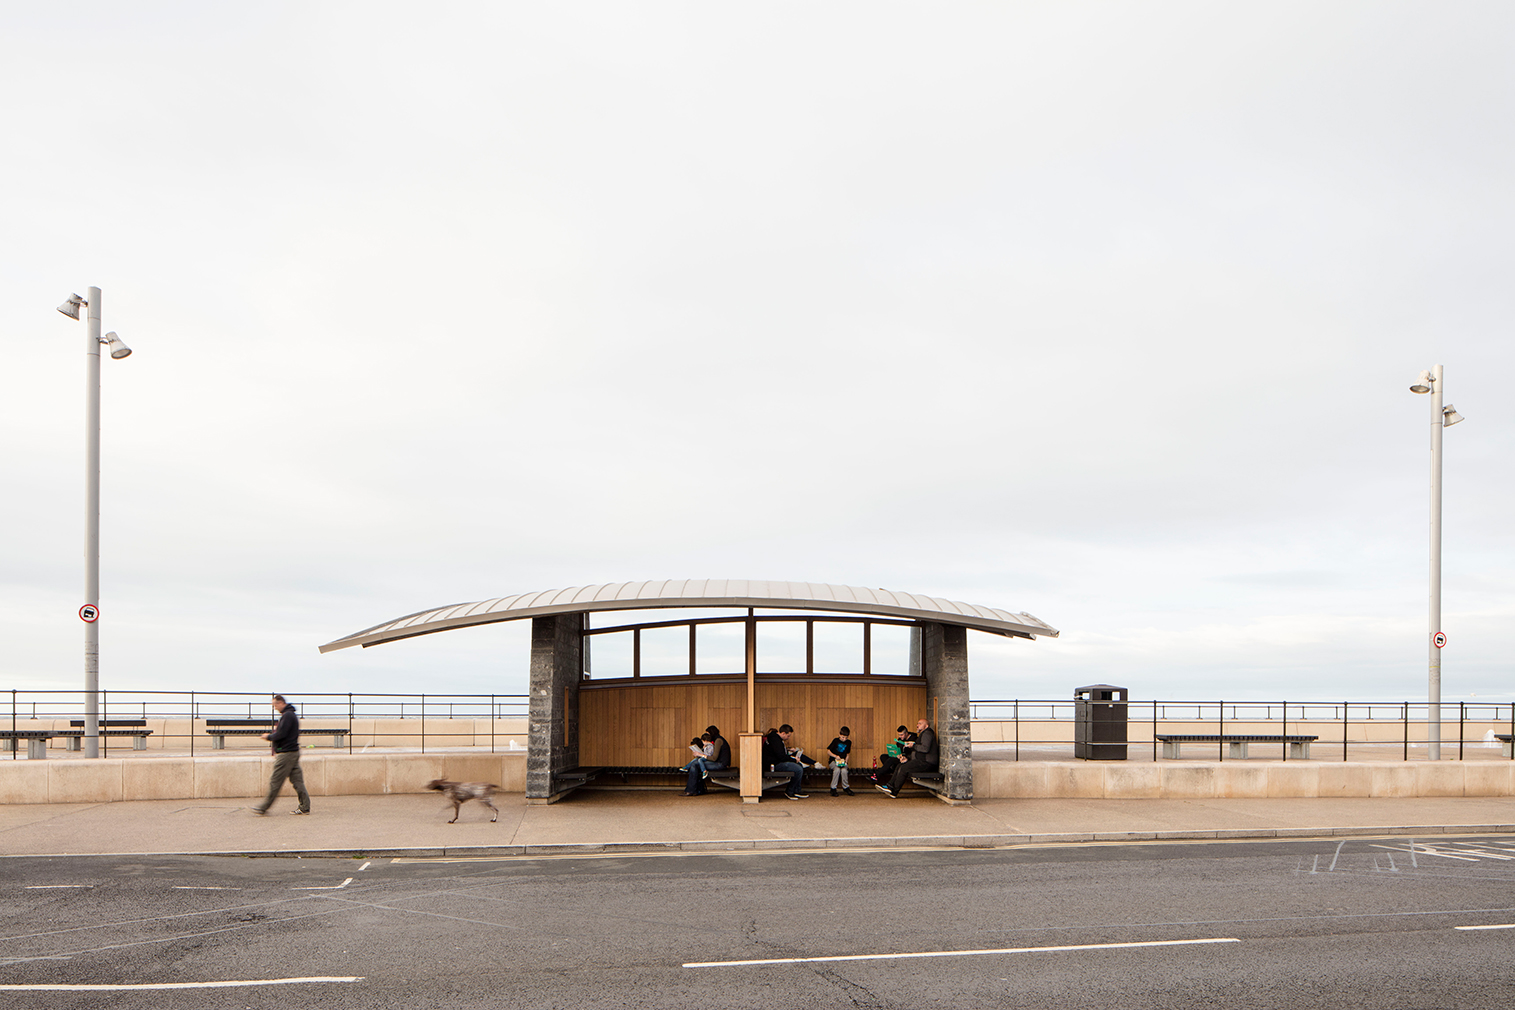 Seaside shelters series by Will Scott